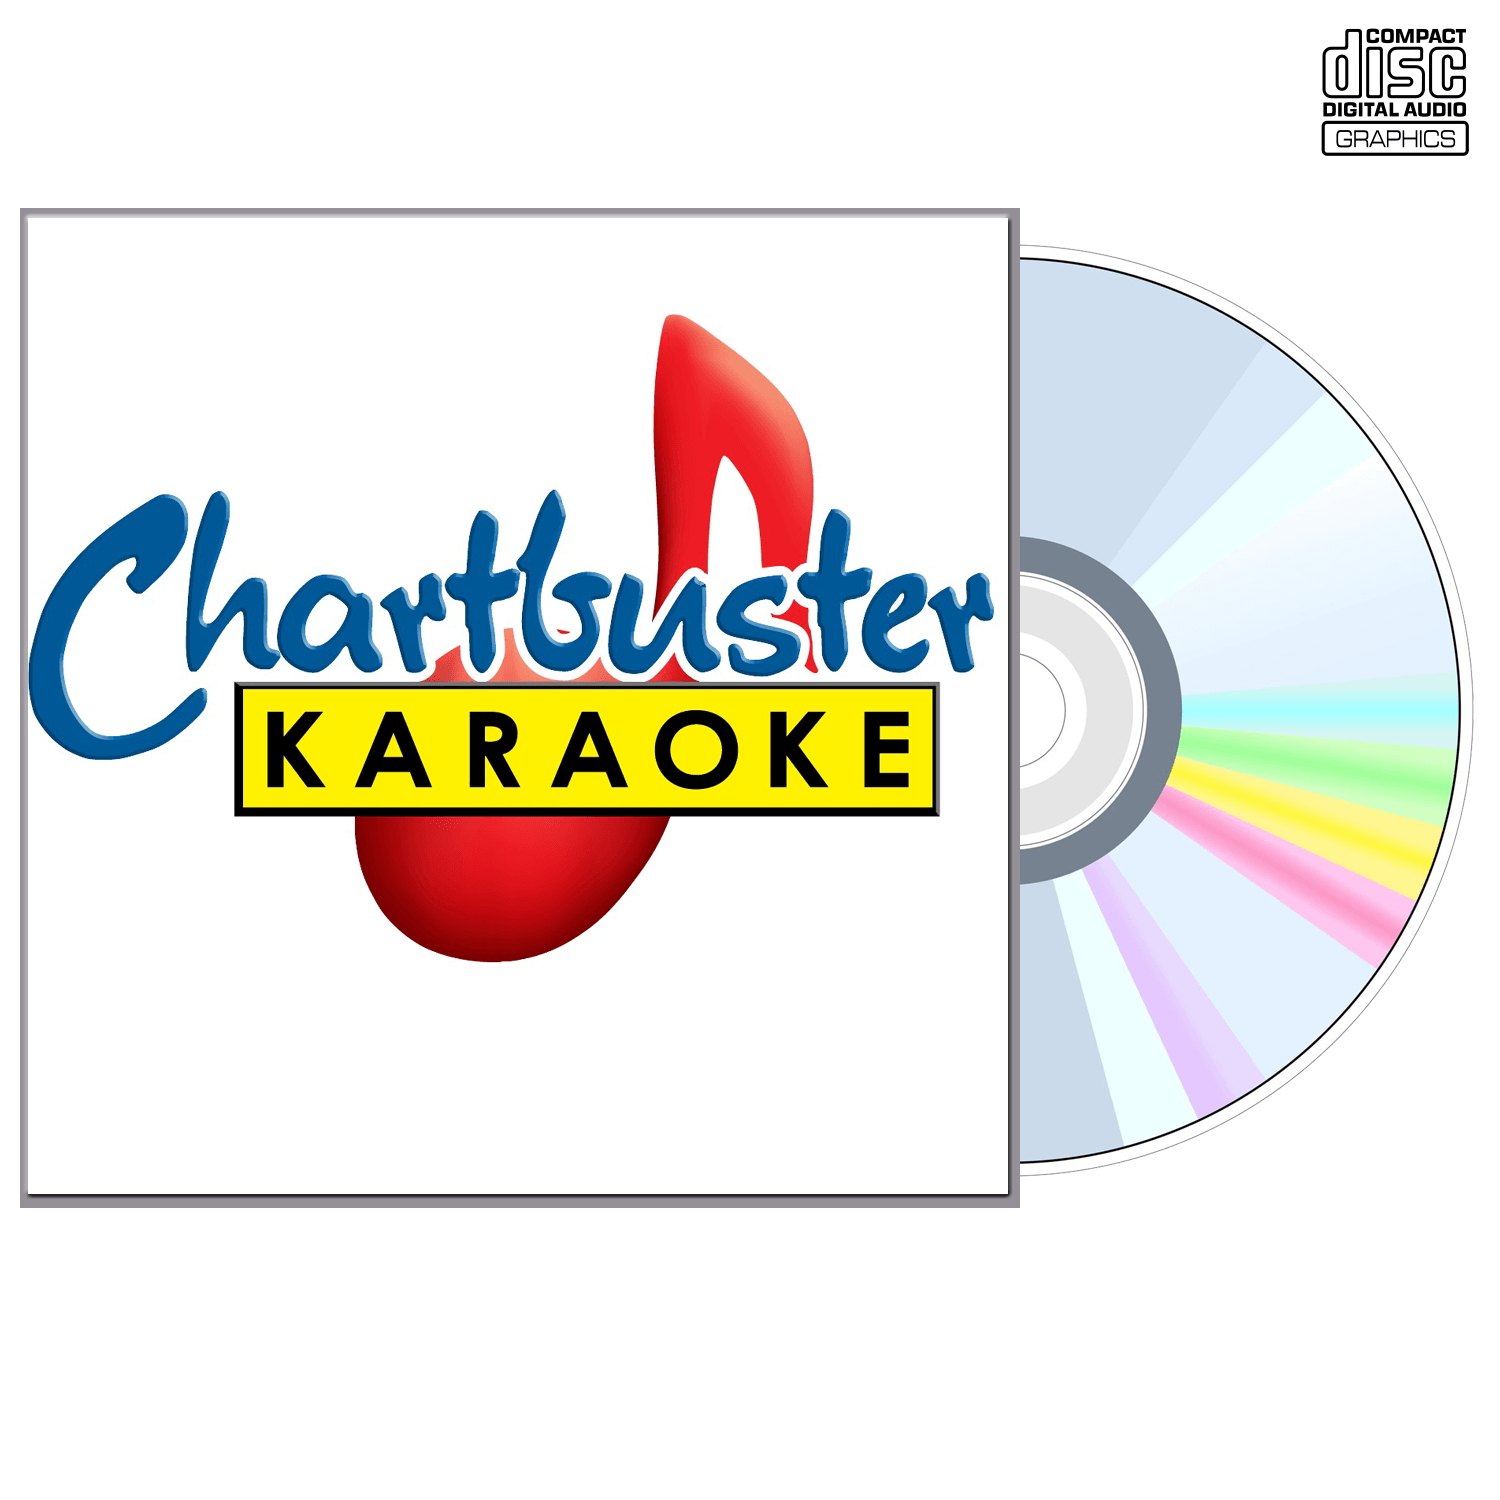 70's Collection Vol 18 - CD+G - Chartbuster Karaoke - Karaoke Home Entertainment